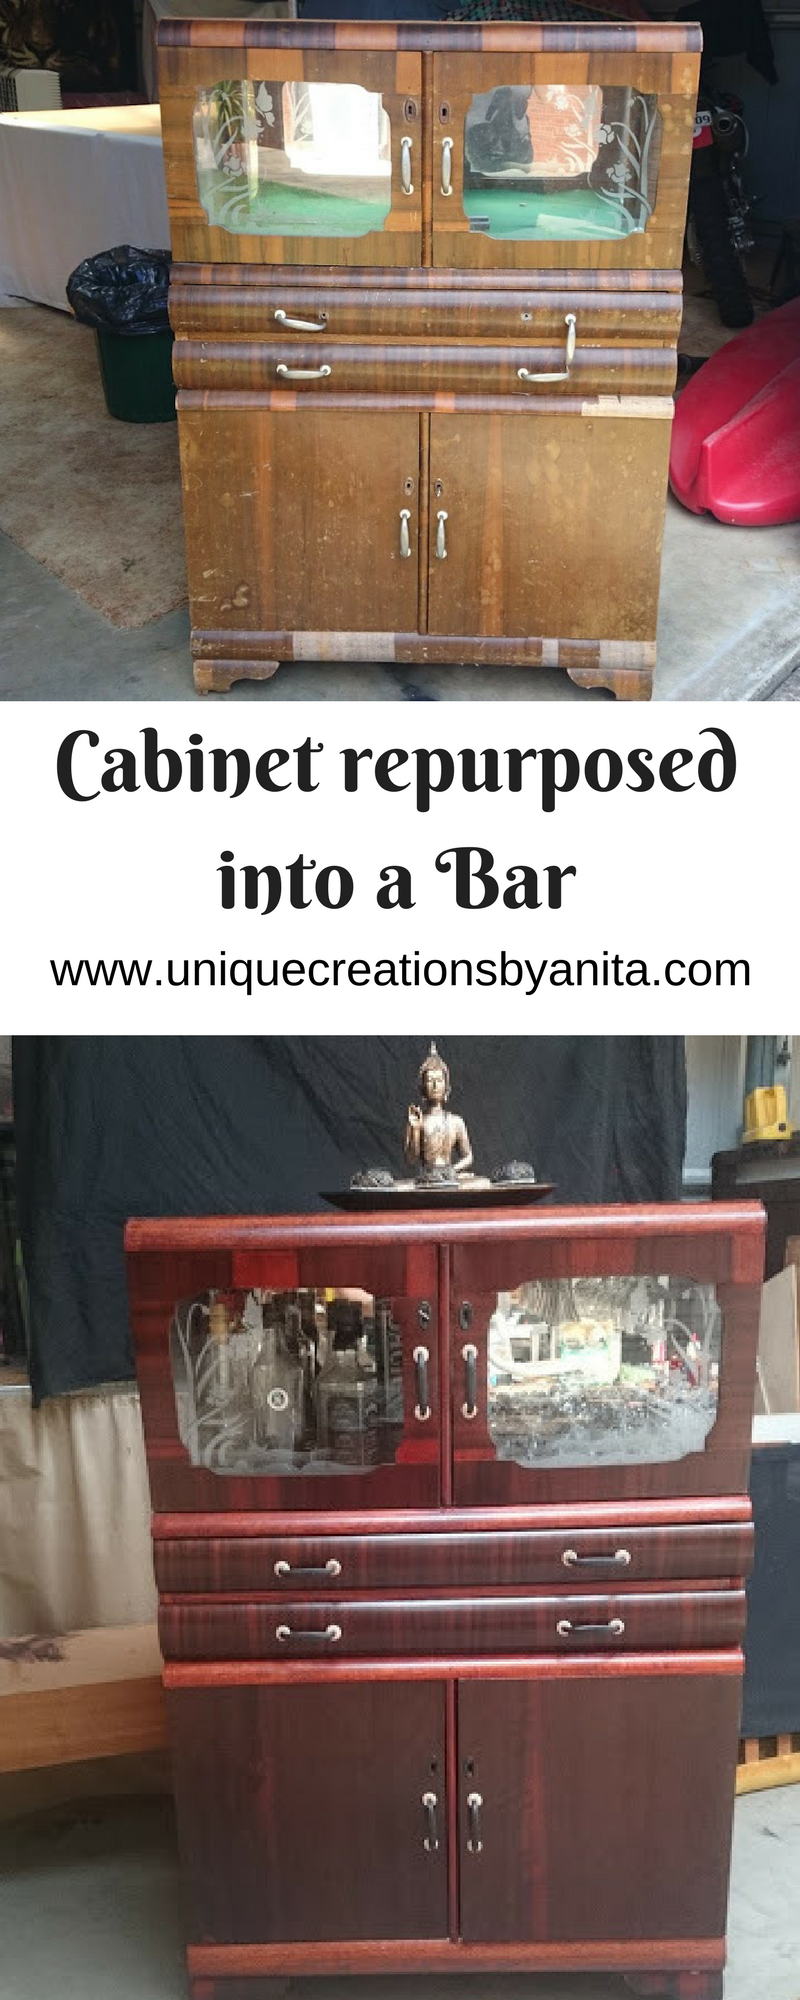 Repurposed furniture